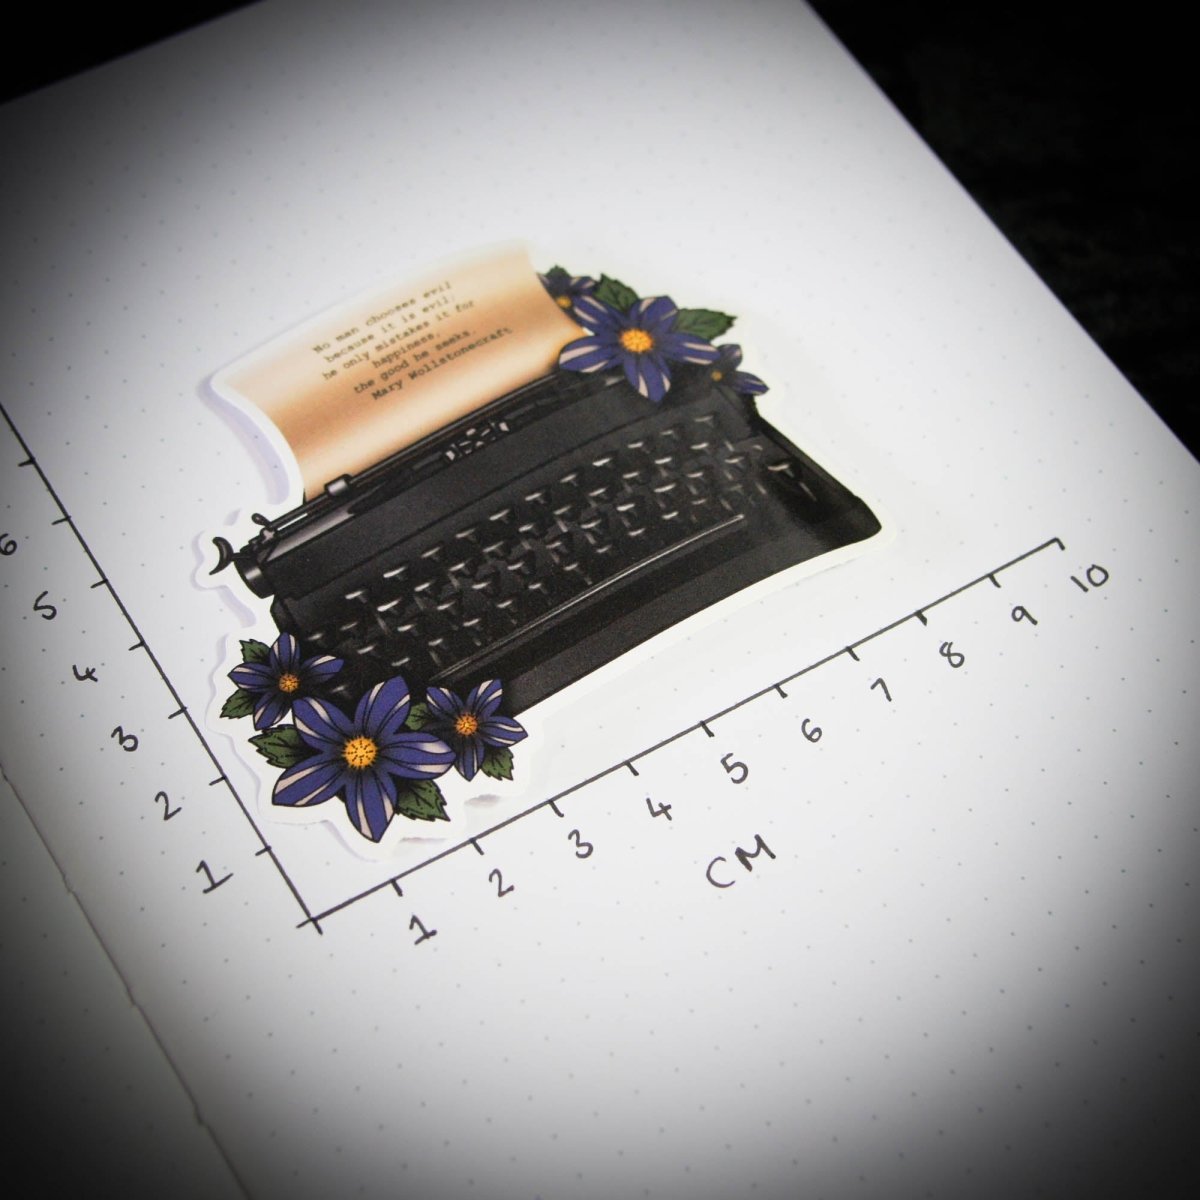 Dark Academia Typewriter - Women Author English Literature Gift